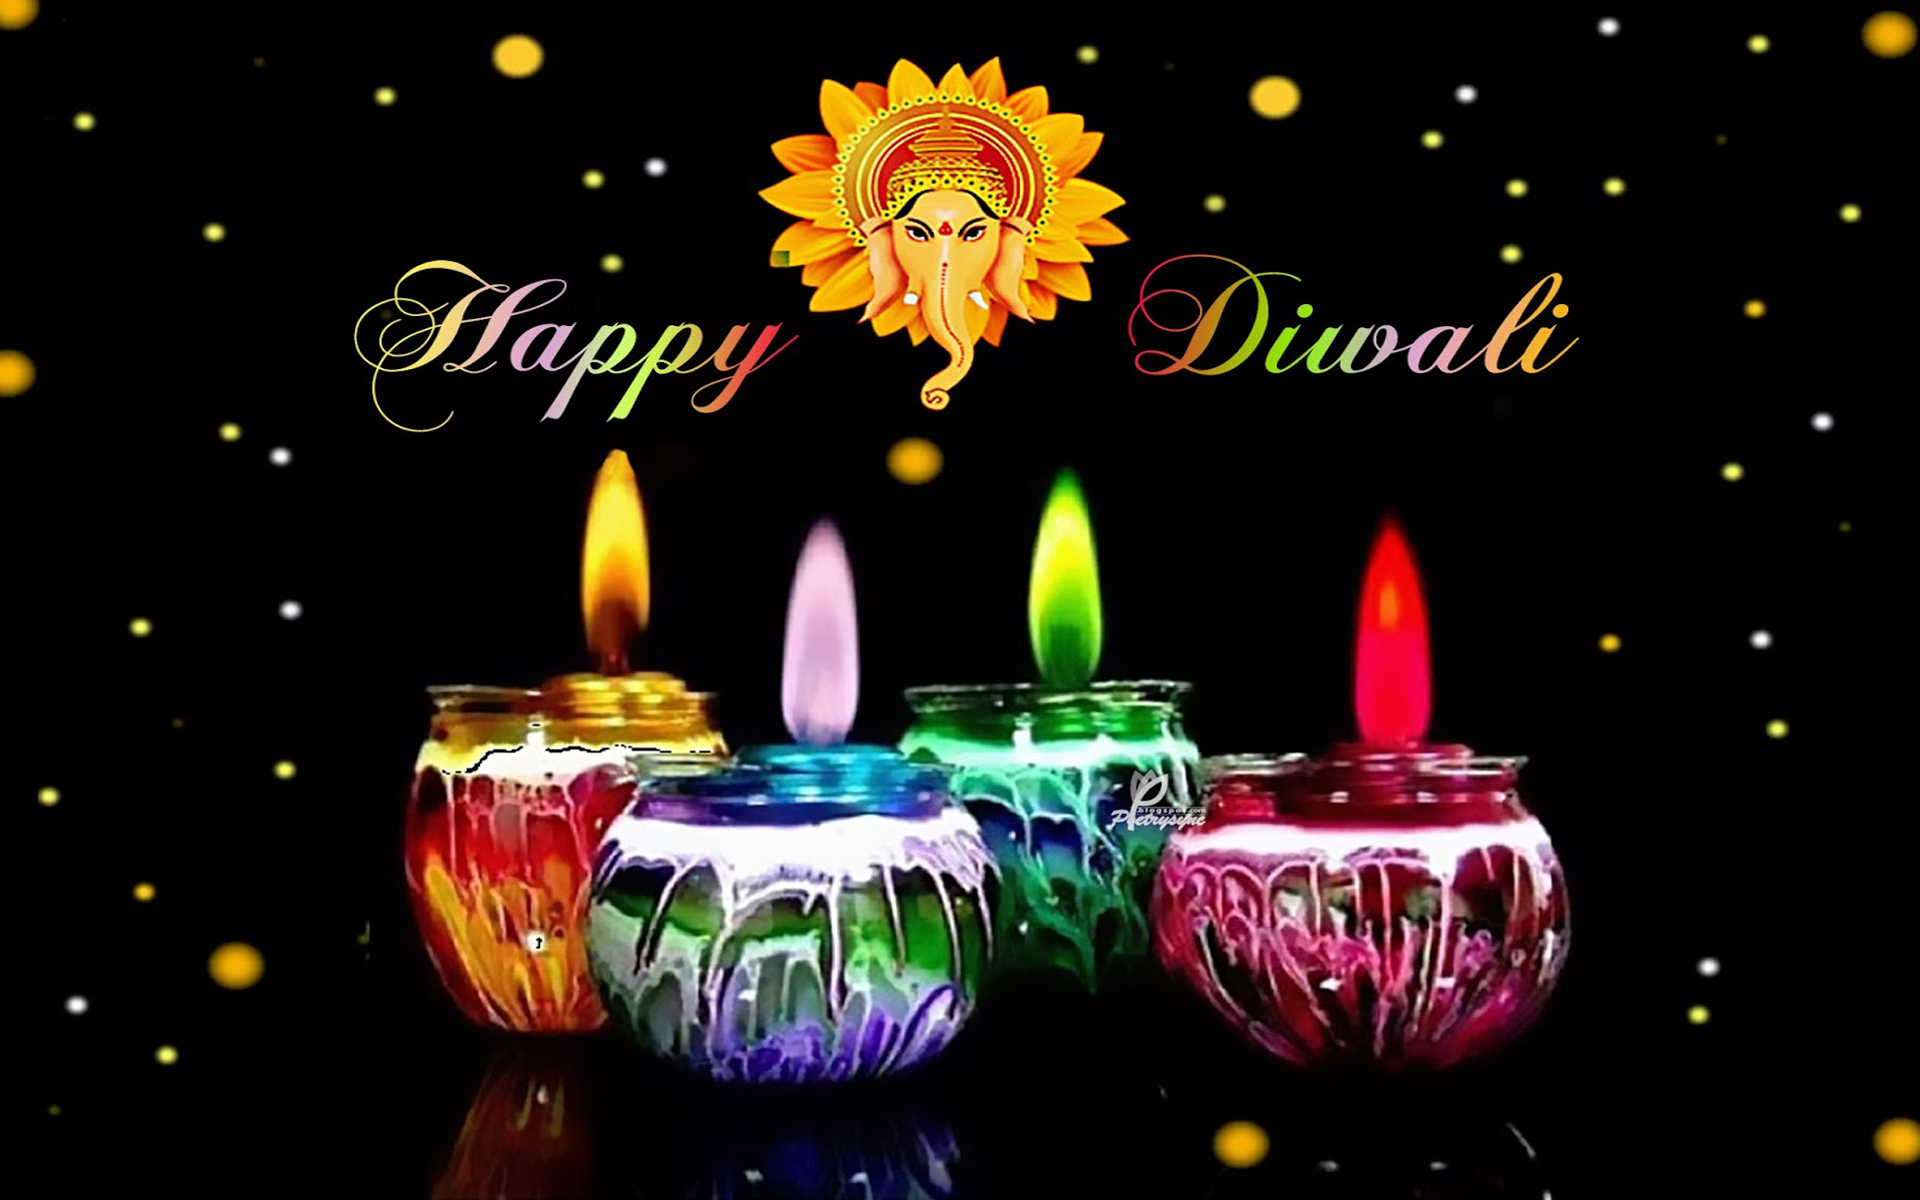 diwali wallpaper,lighting,candle,holiday,text,diwali